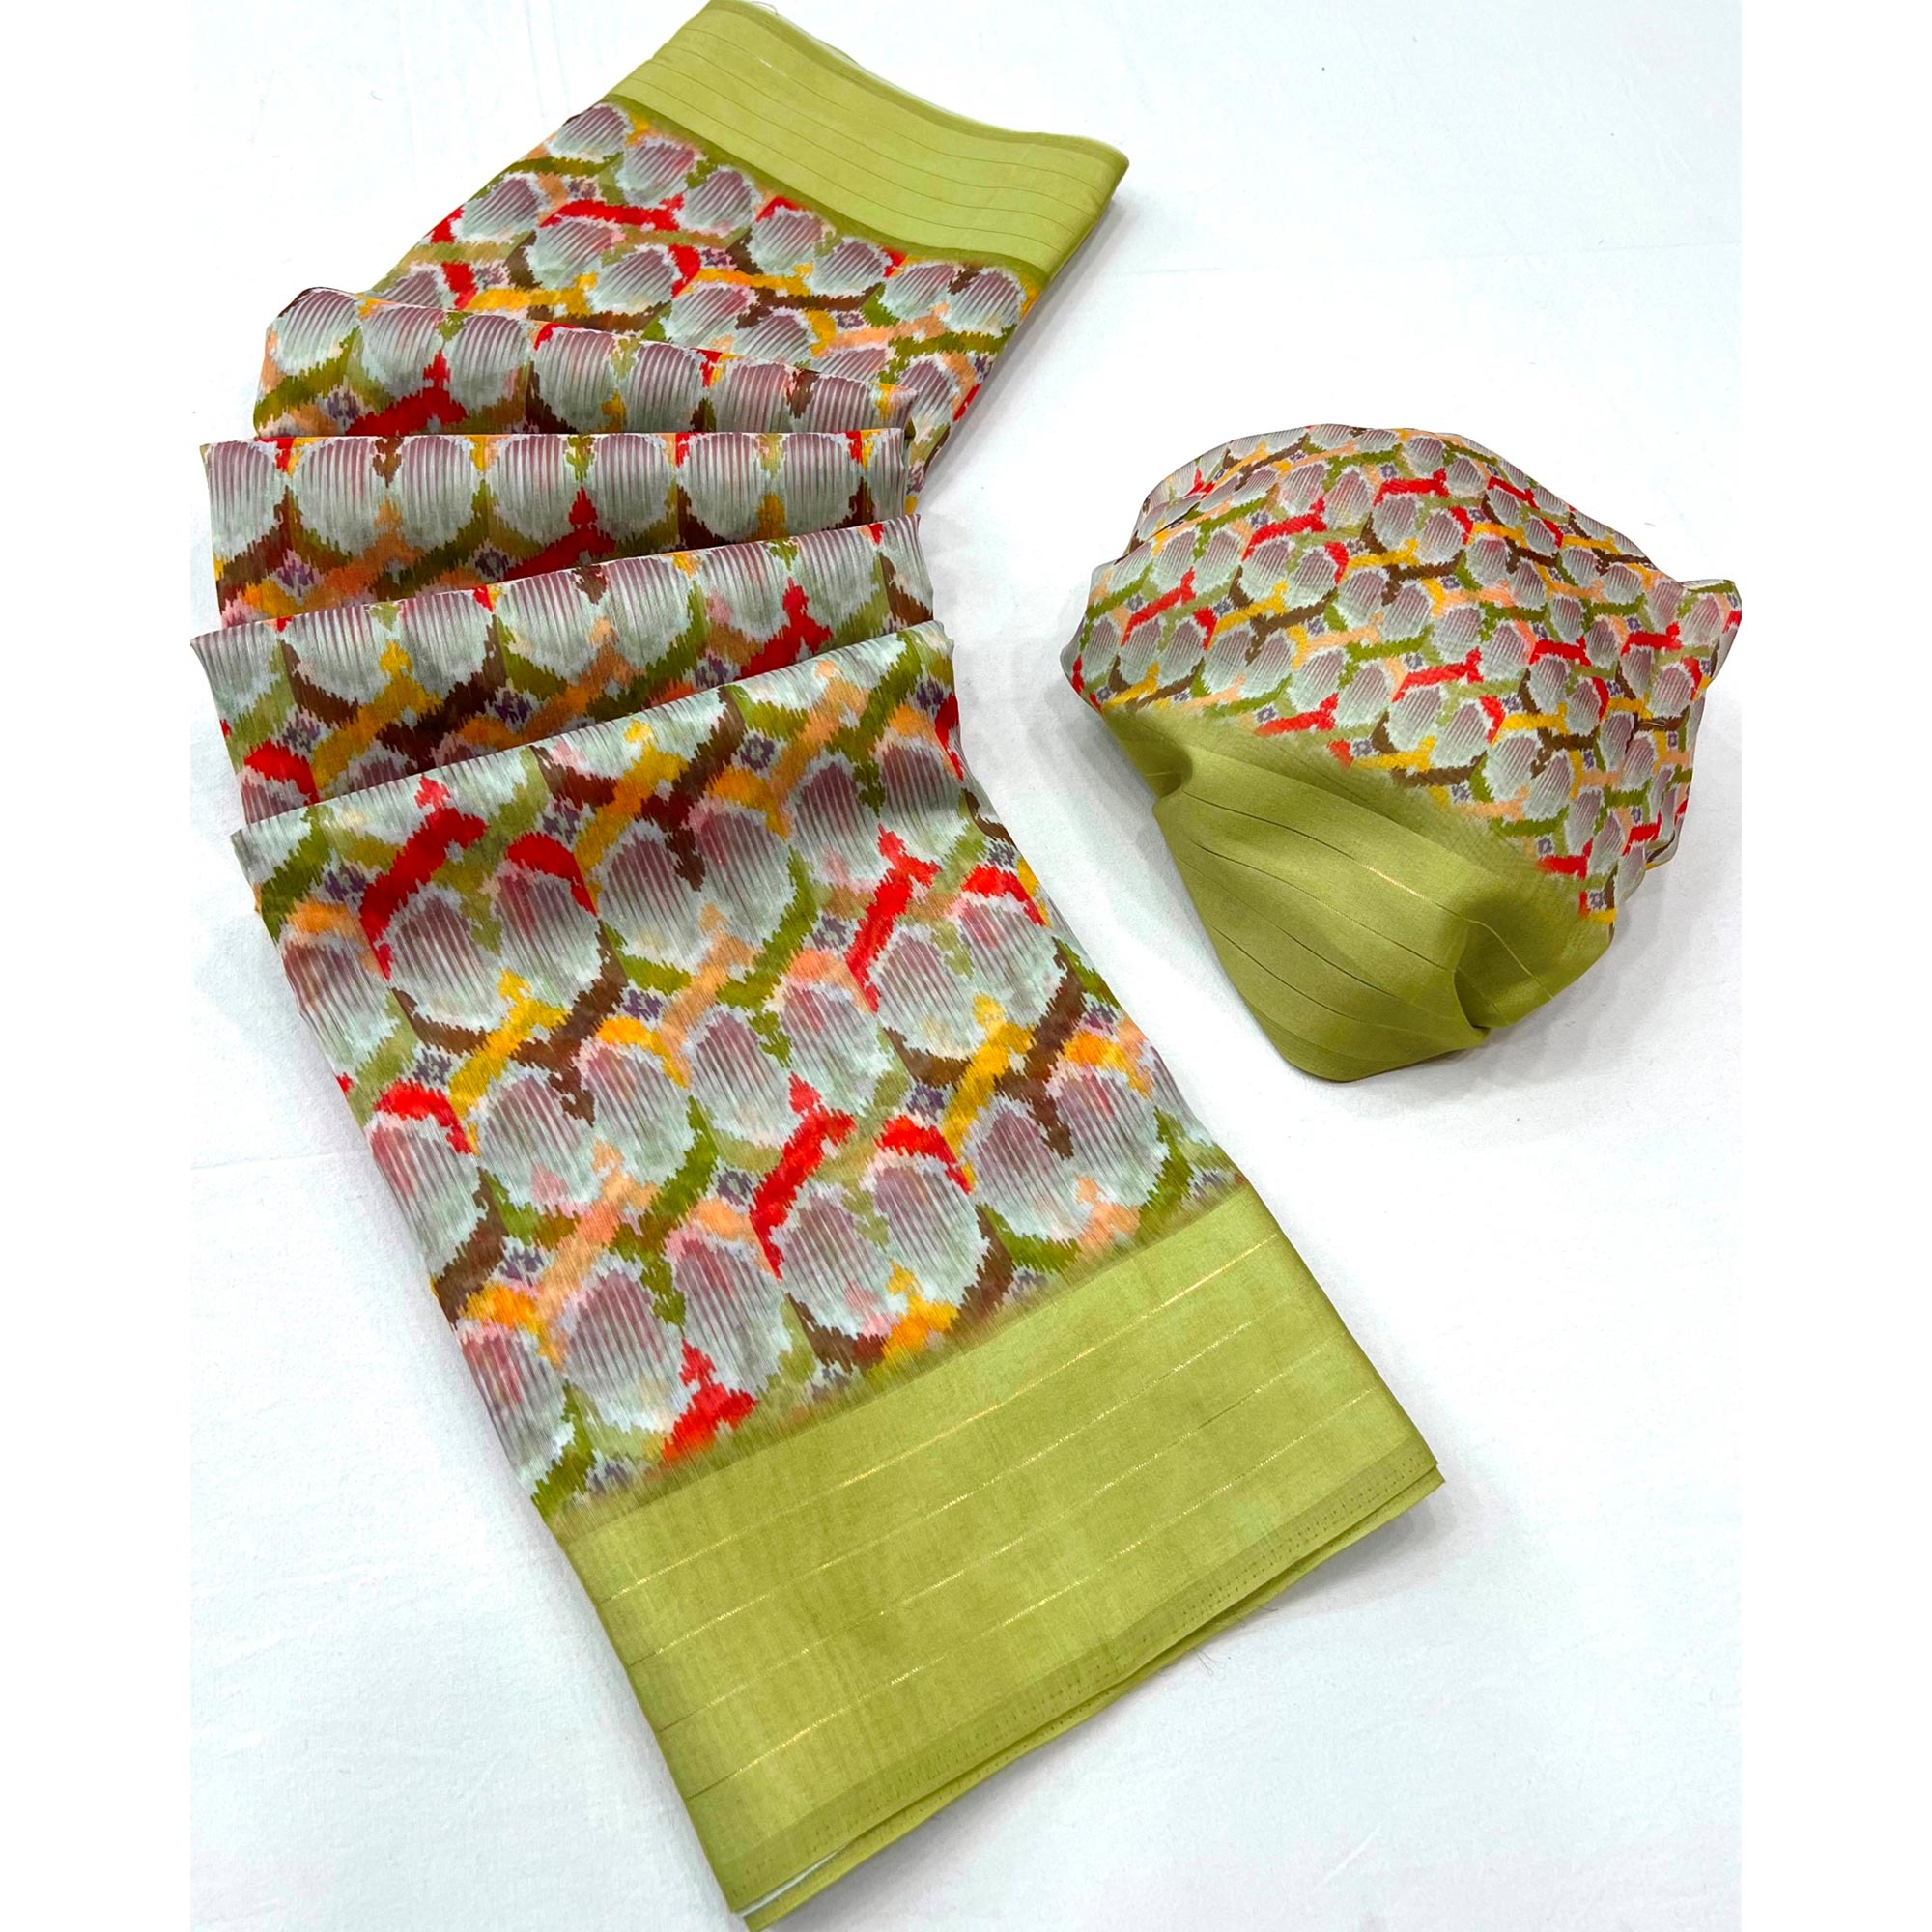 Green Digital Printed Cotton Blend Saree